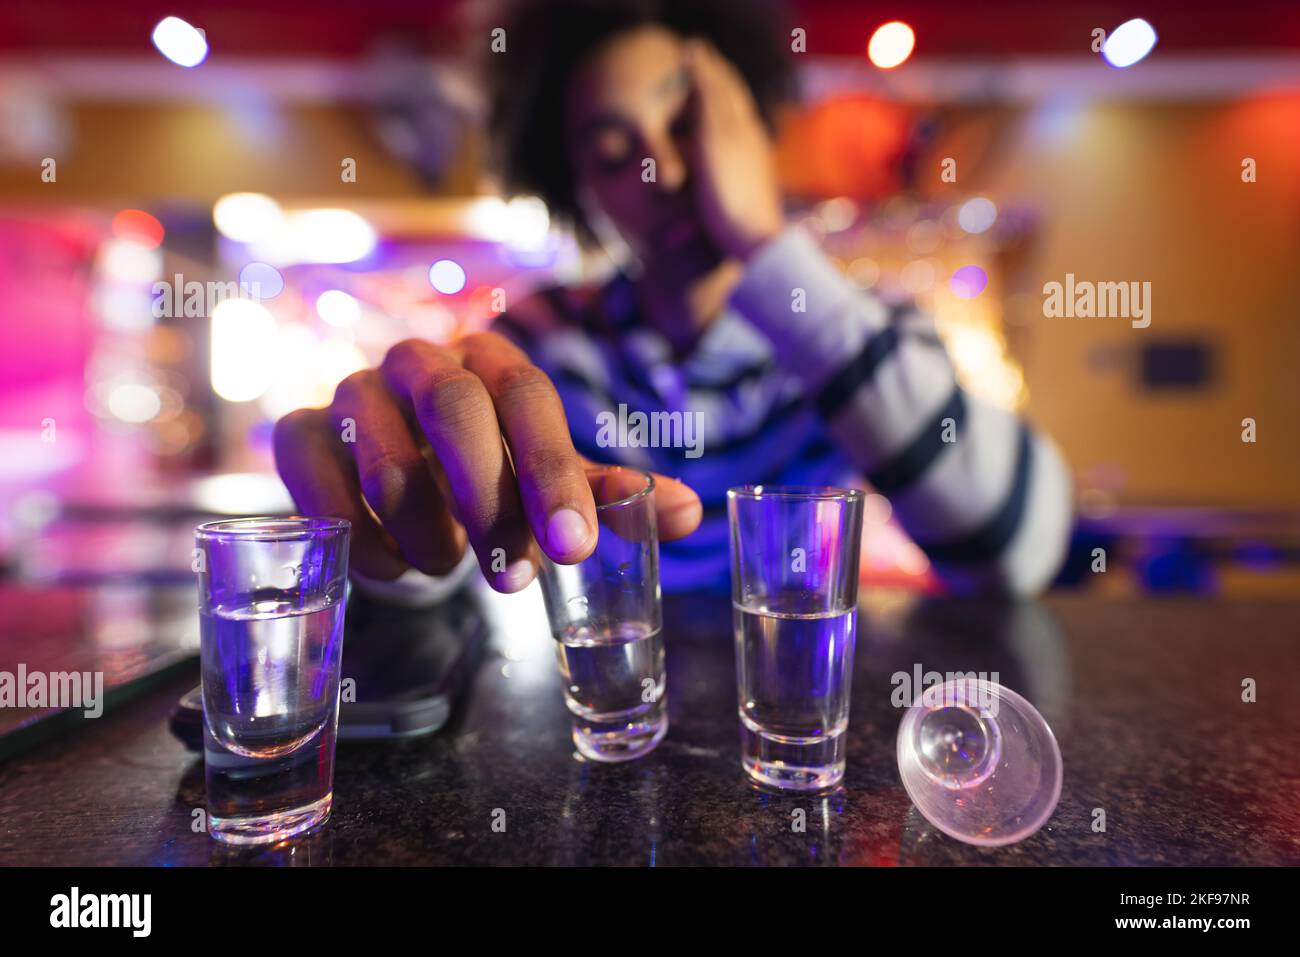 Betrunkener afroamerikanischer Mann sitzt an der Bar mit Schnapsgläsern, selektive Fokussierung Stockfoto